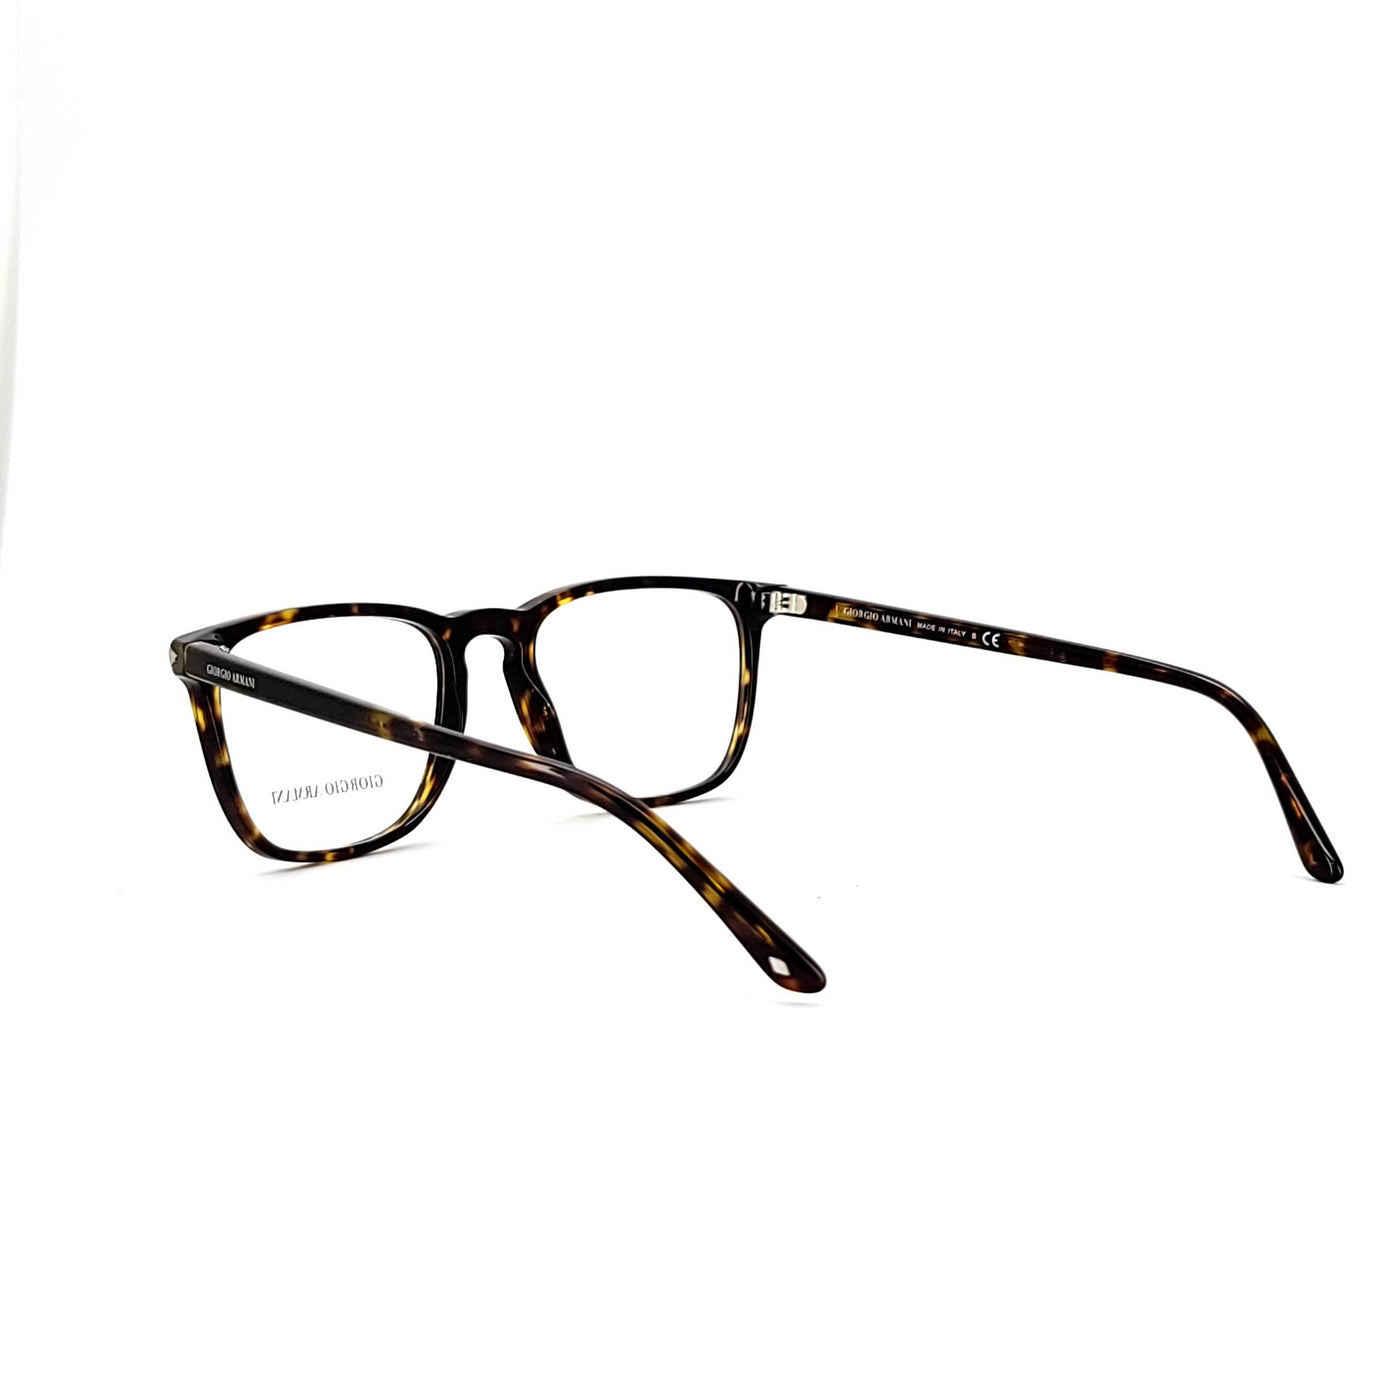 Giorgio Armani AR7193/5026 | Eyeglasses - Vision Express Optical Philippines